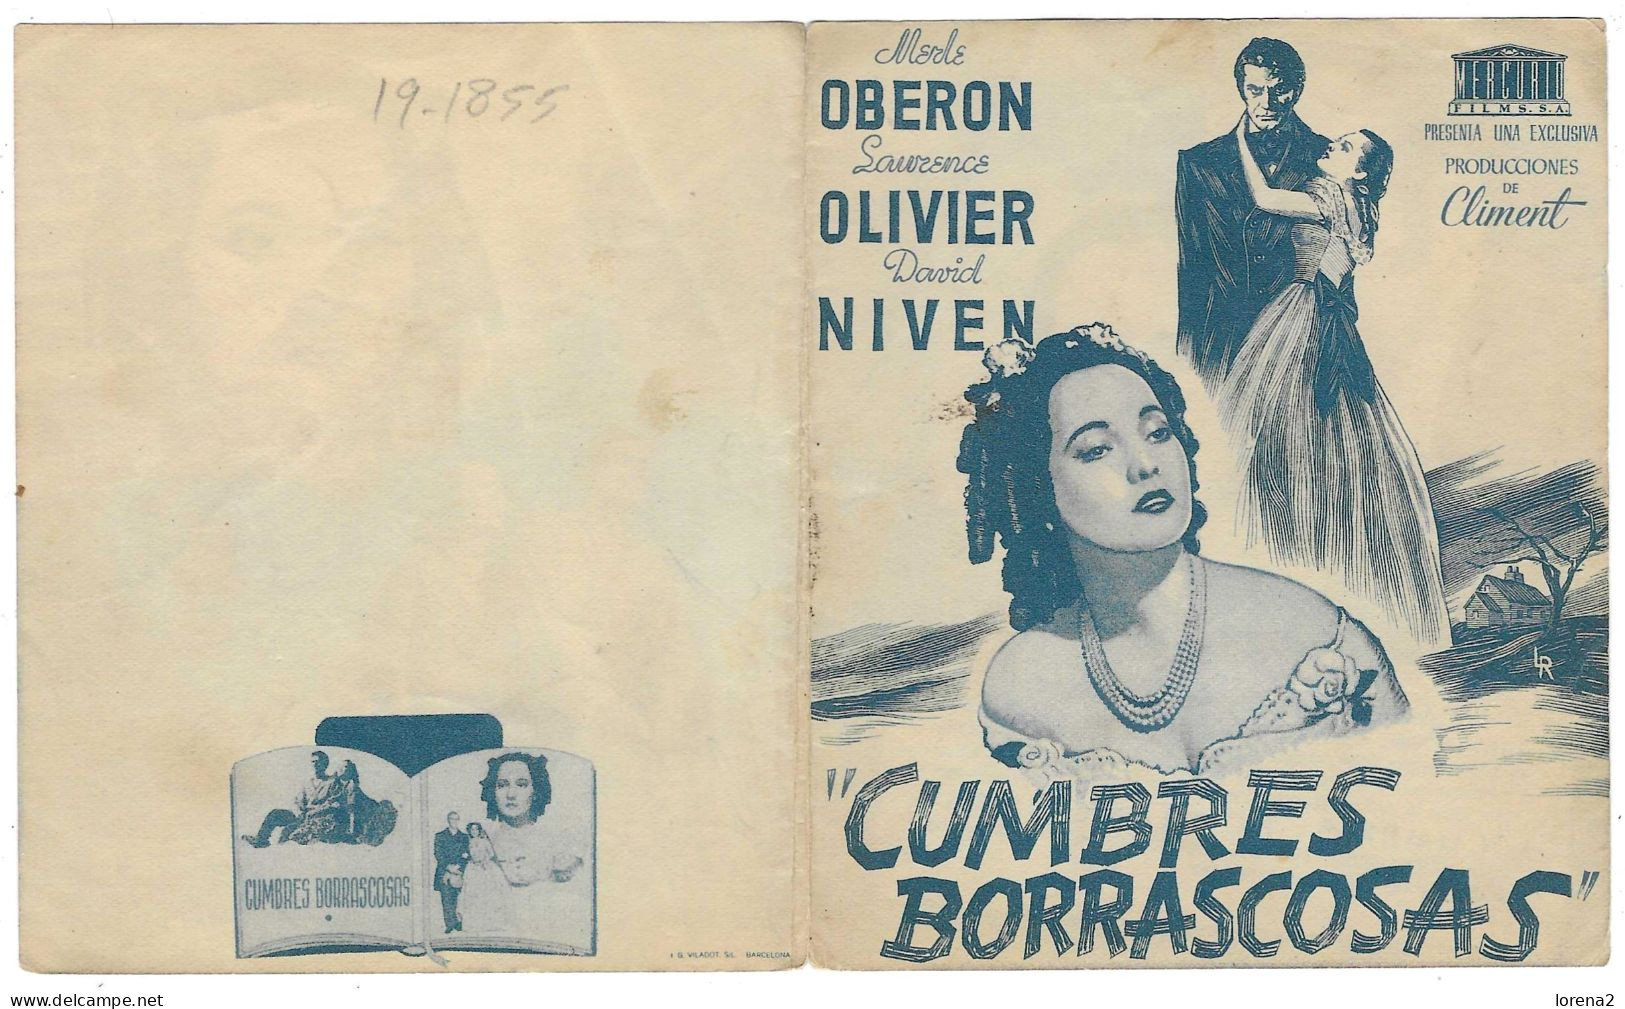 Programa Cine. Cumbres Borrascosas. Laurence Olivier. 19-1855 - Cinema Advertisement